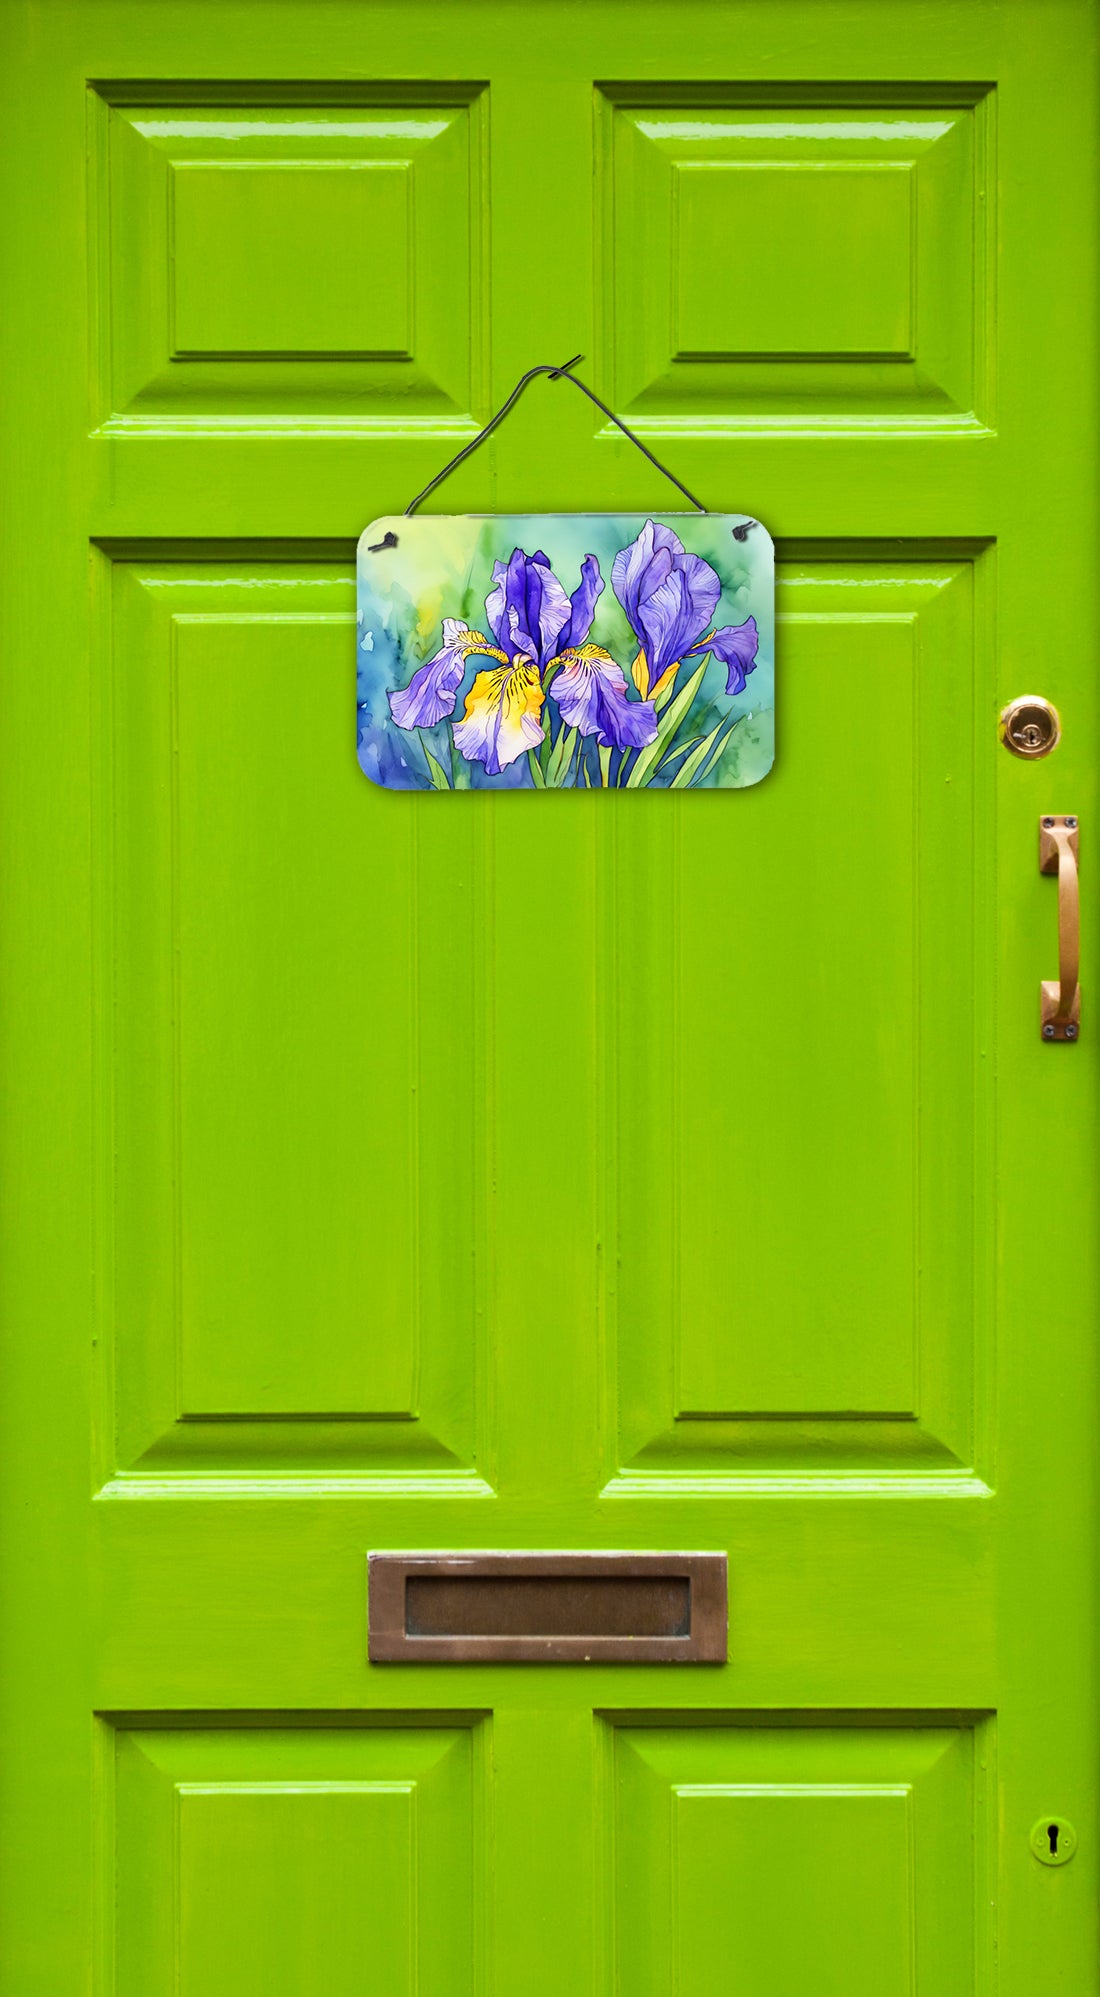 Buy this Tennessee Iris in Watercolor Wall or Door Hanging Prints